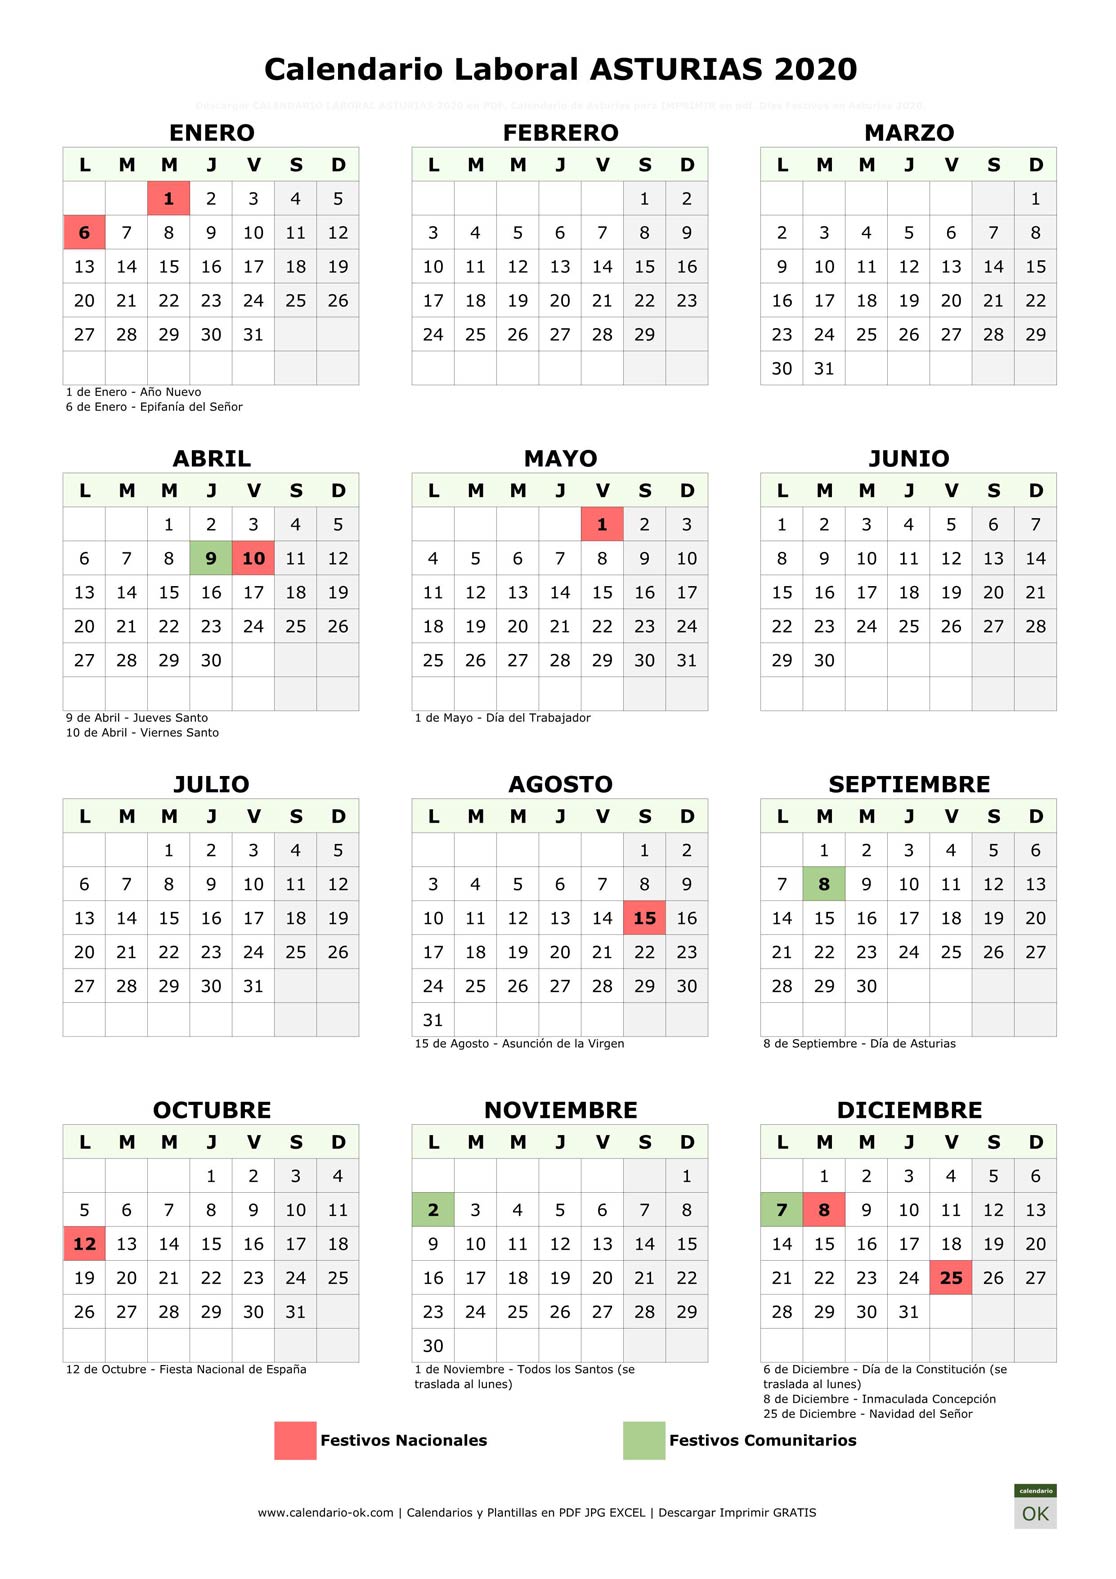 Calendario Laboral Principado de Asturias 2020